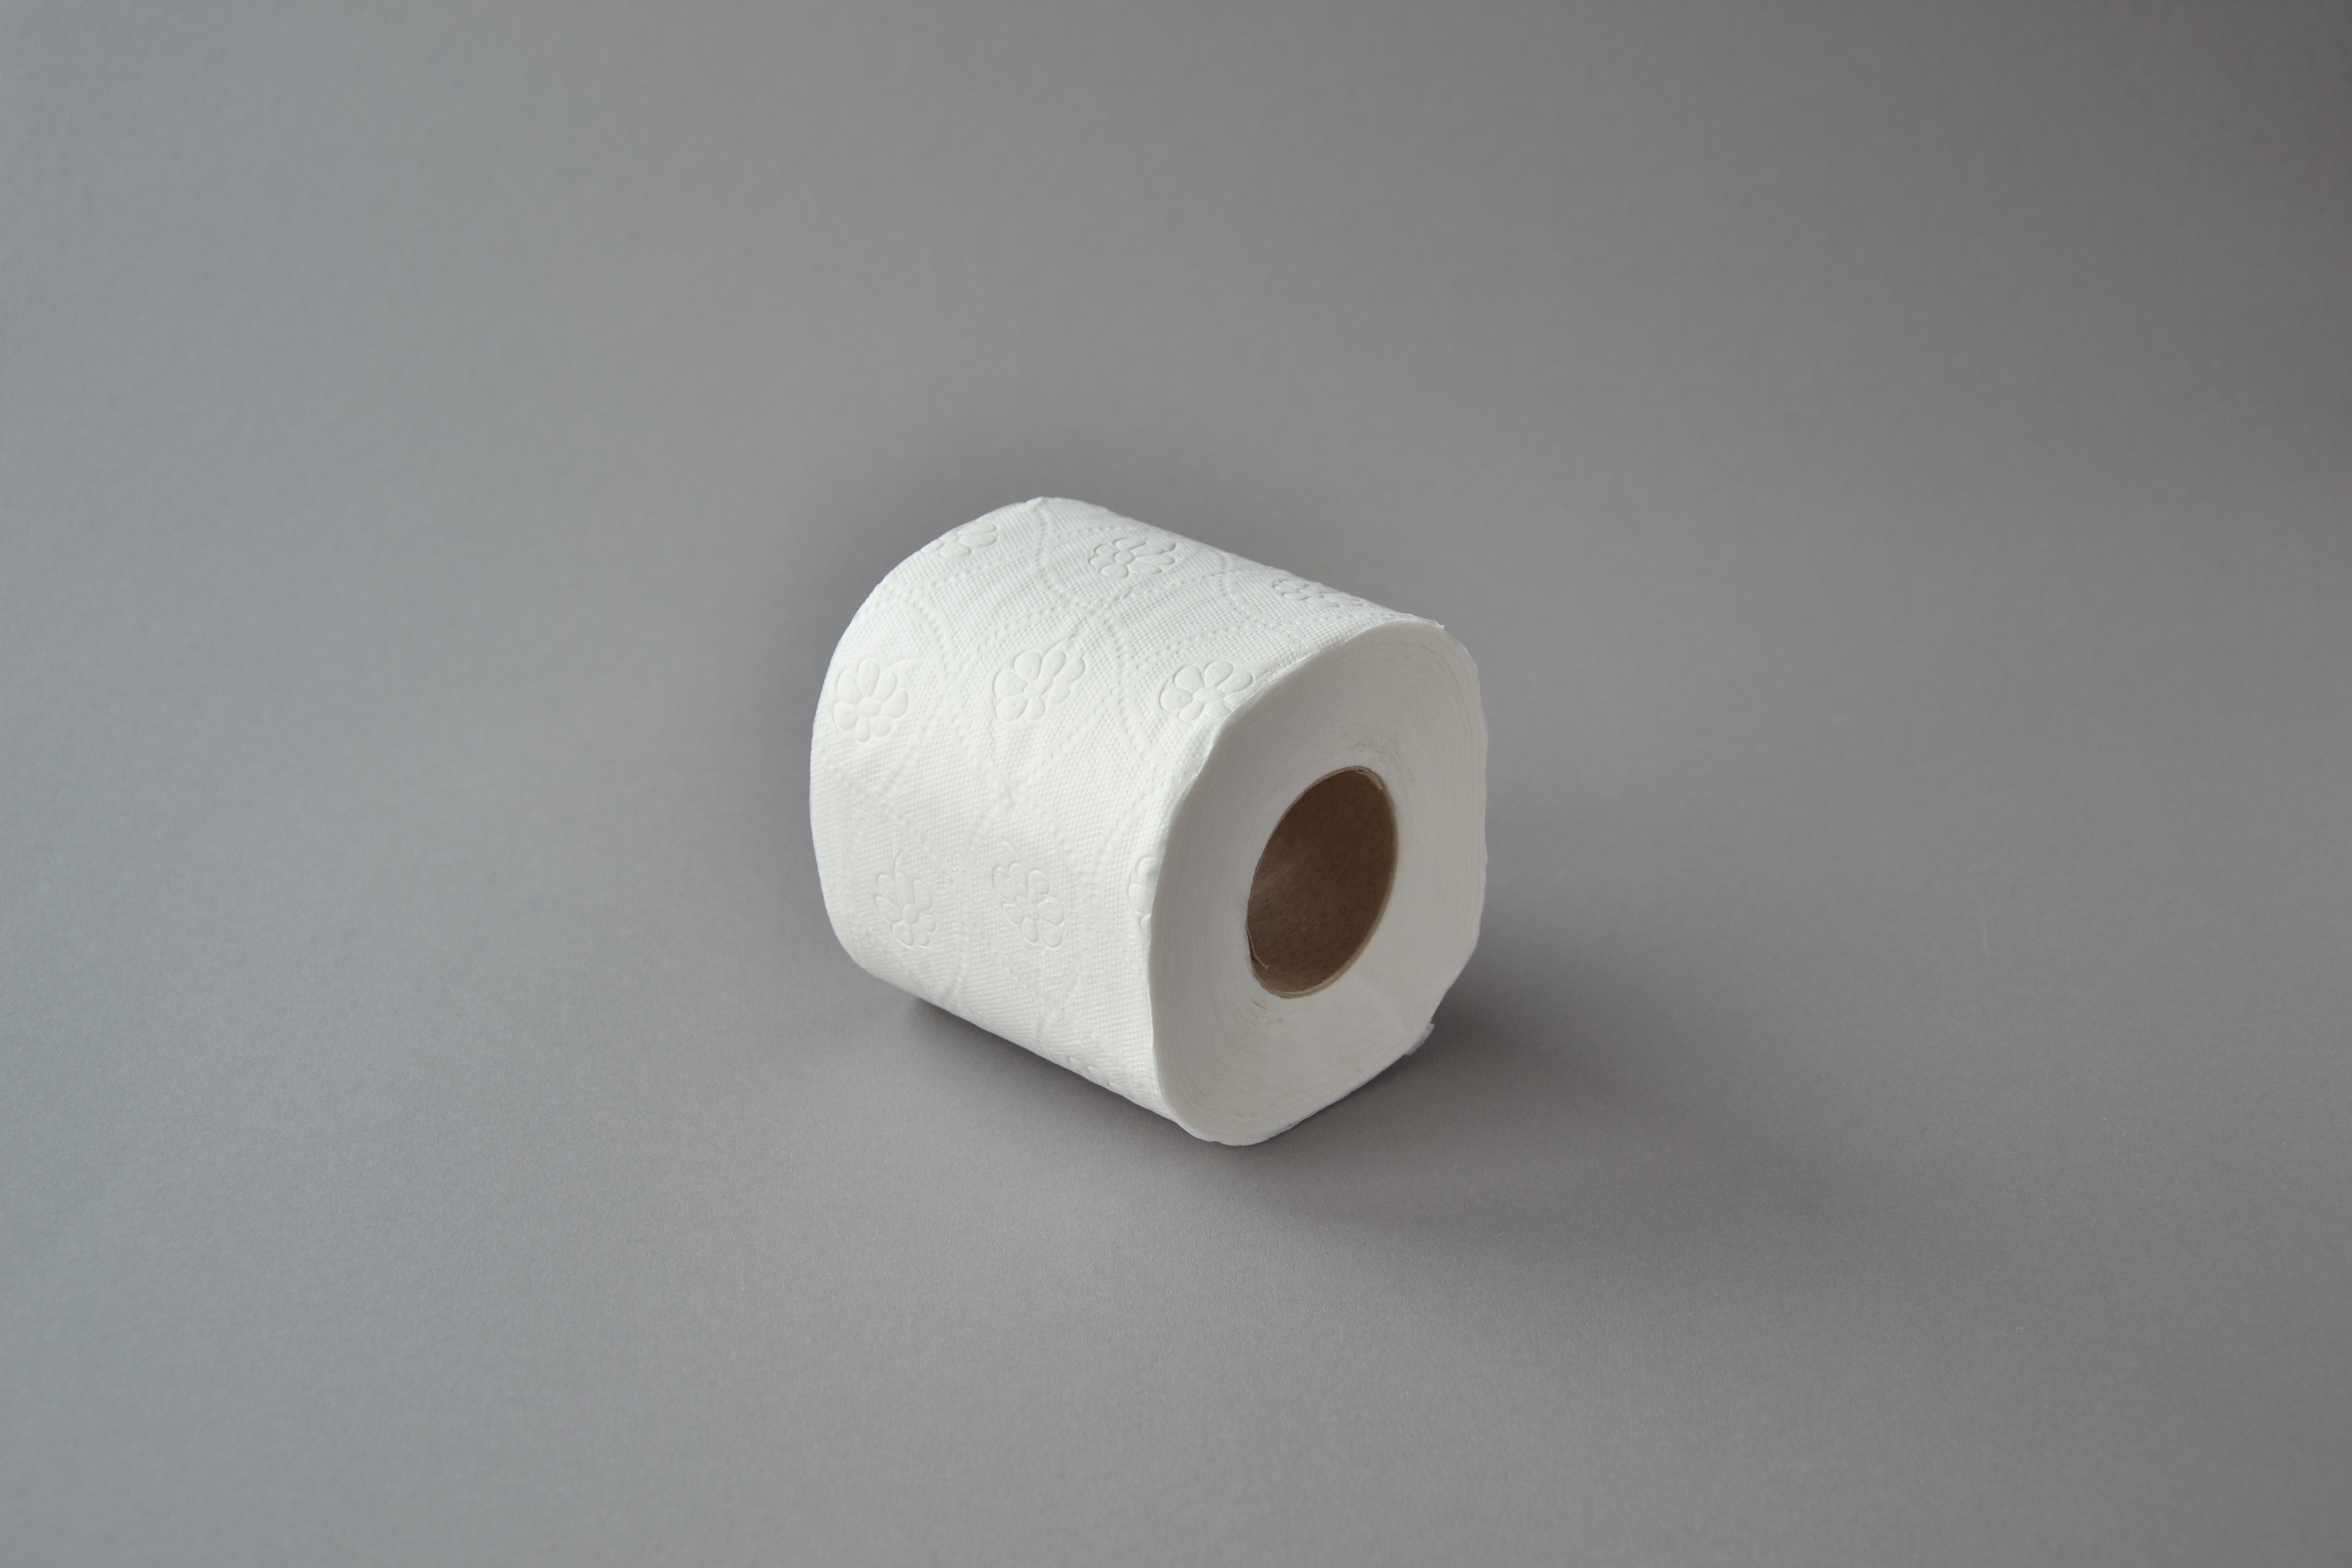 64 96 128 192 Rollen Toilettenpapier Klopapier WC-Papier 3-lagig Zellstoff JETZT 